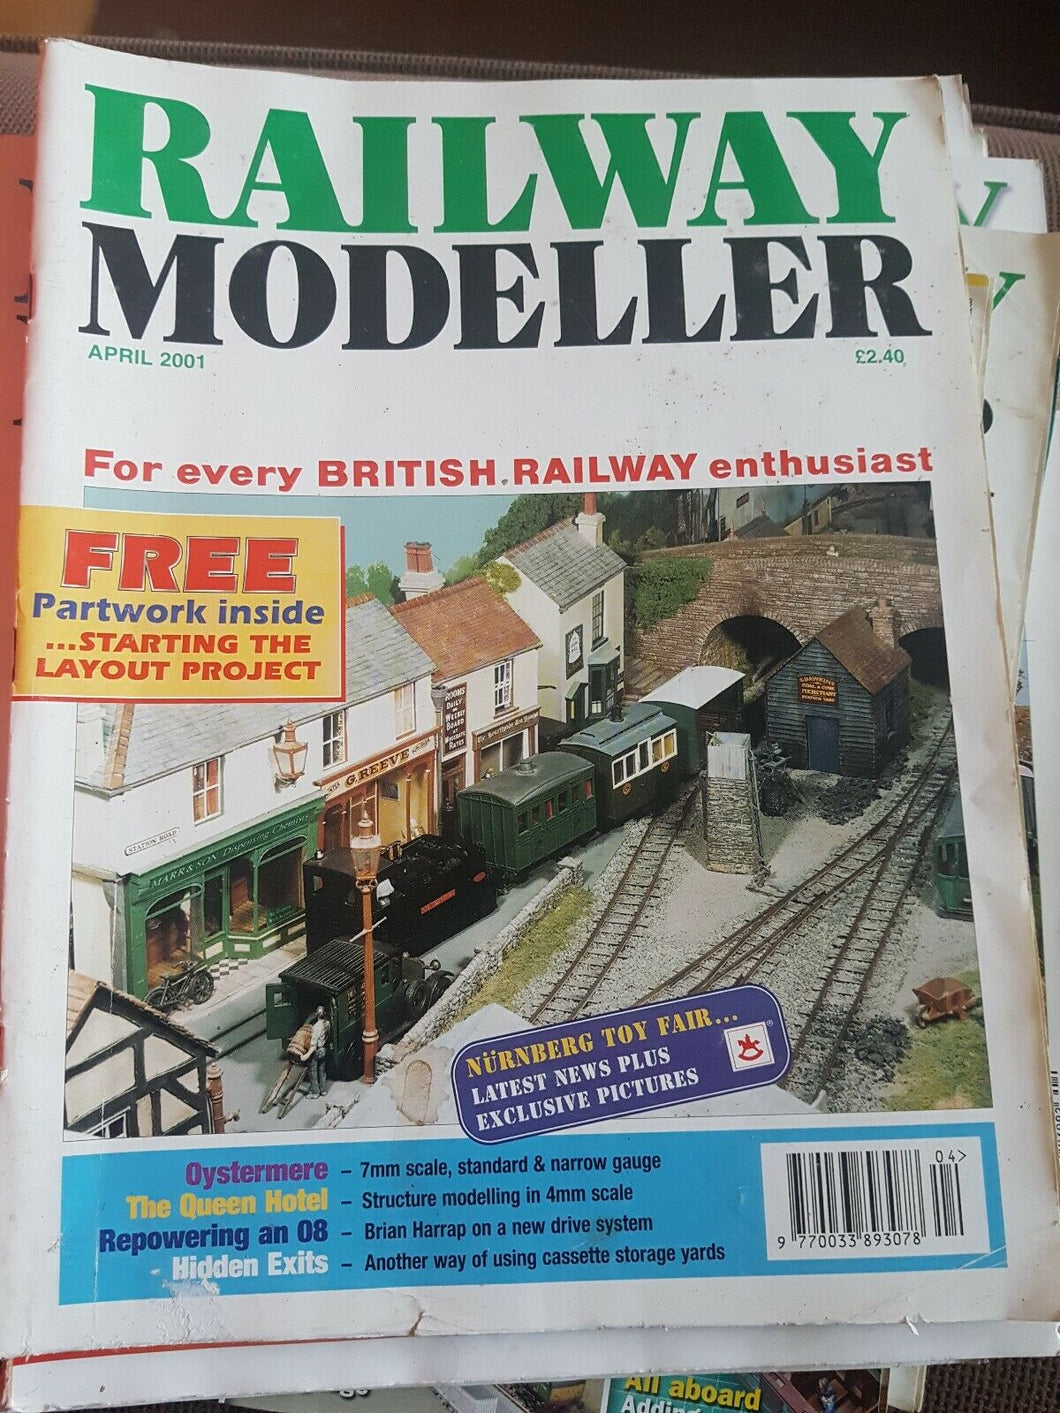 Railway modeller magazine April 2001. Cover has mark and tear.